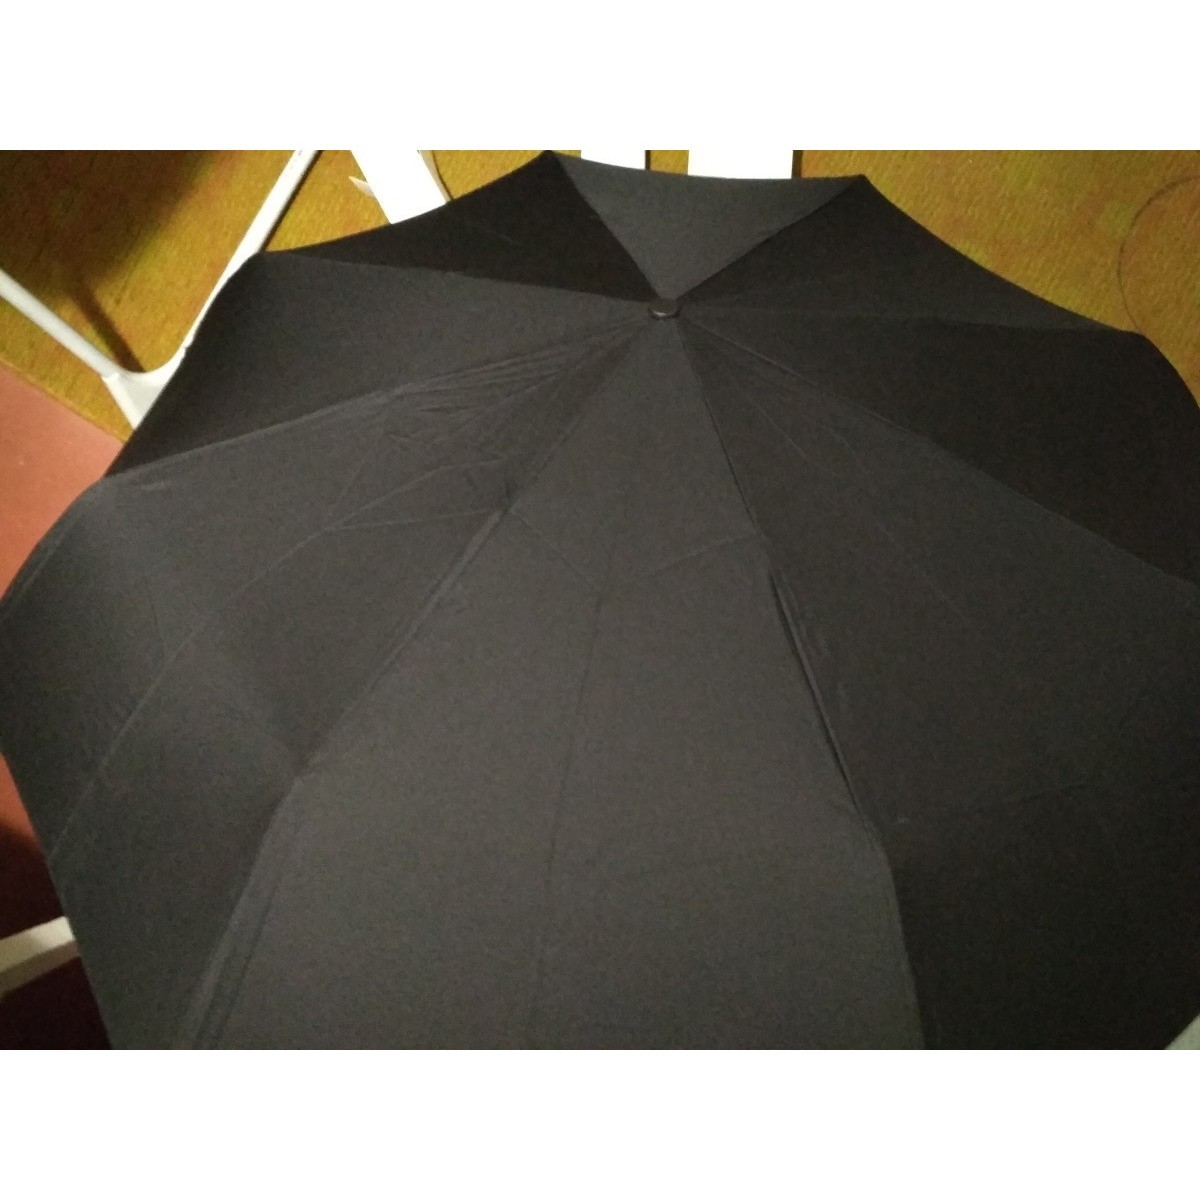 Зонт Xiaomi Mijia Automatic Купить